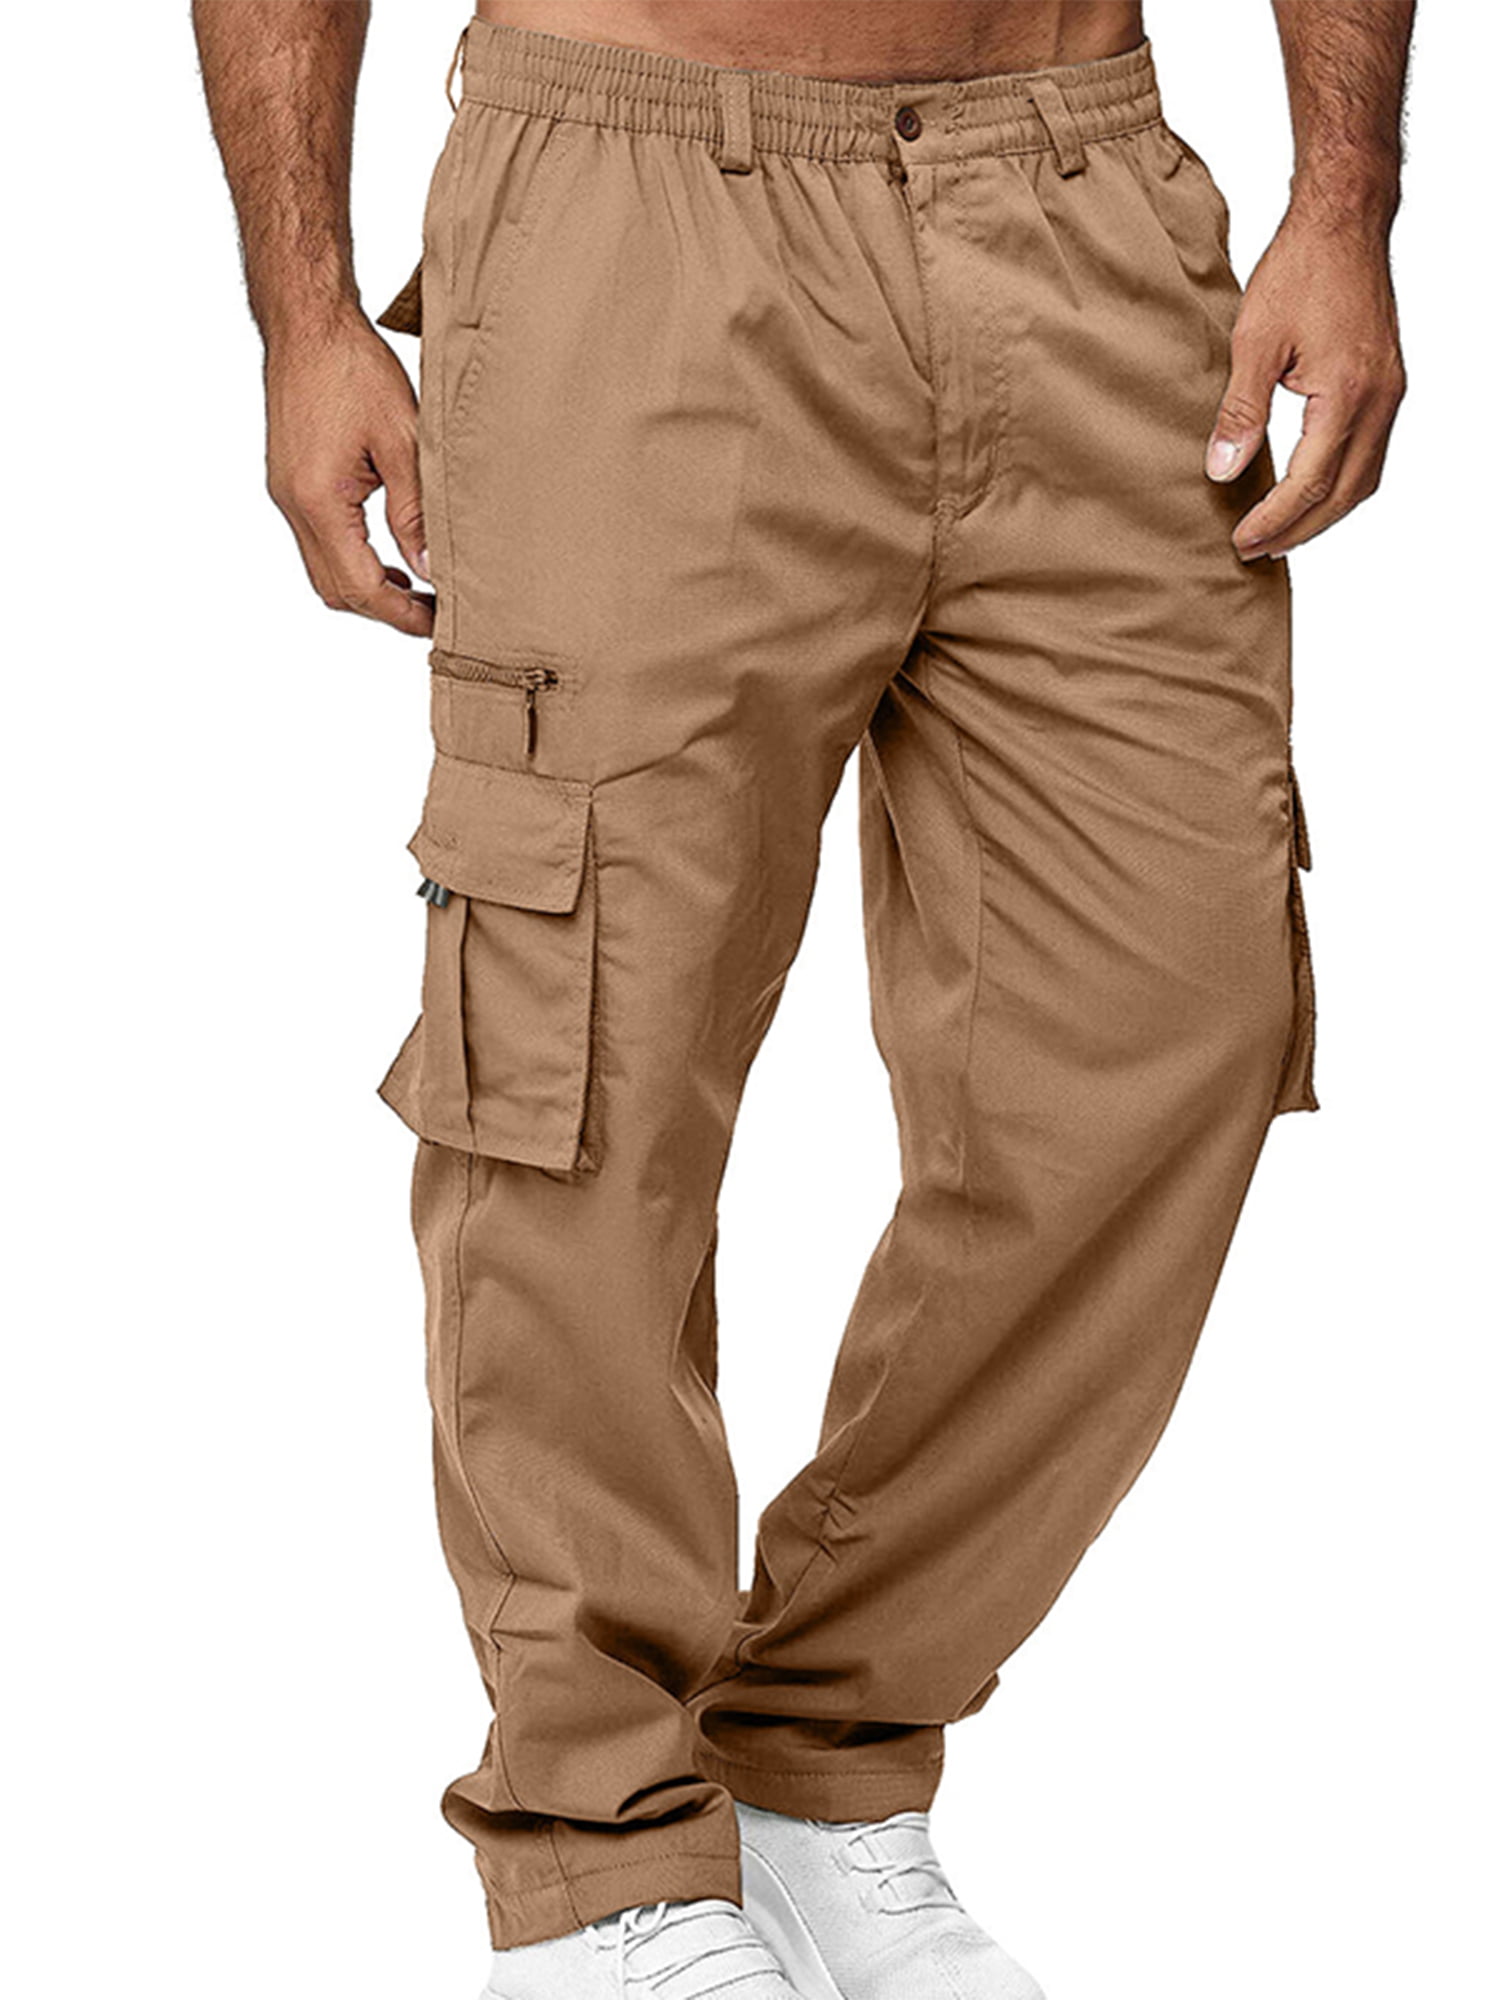 Worker pants rust фото 107